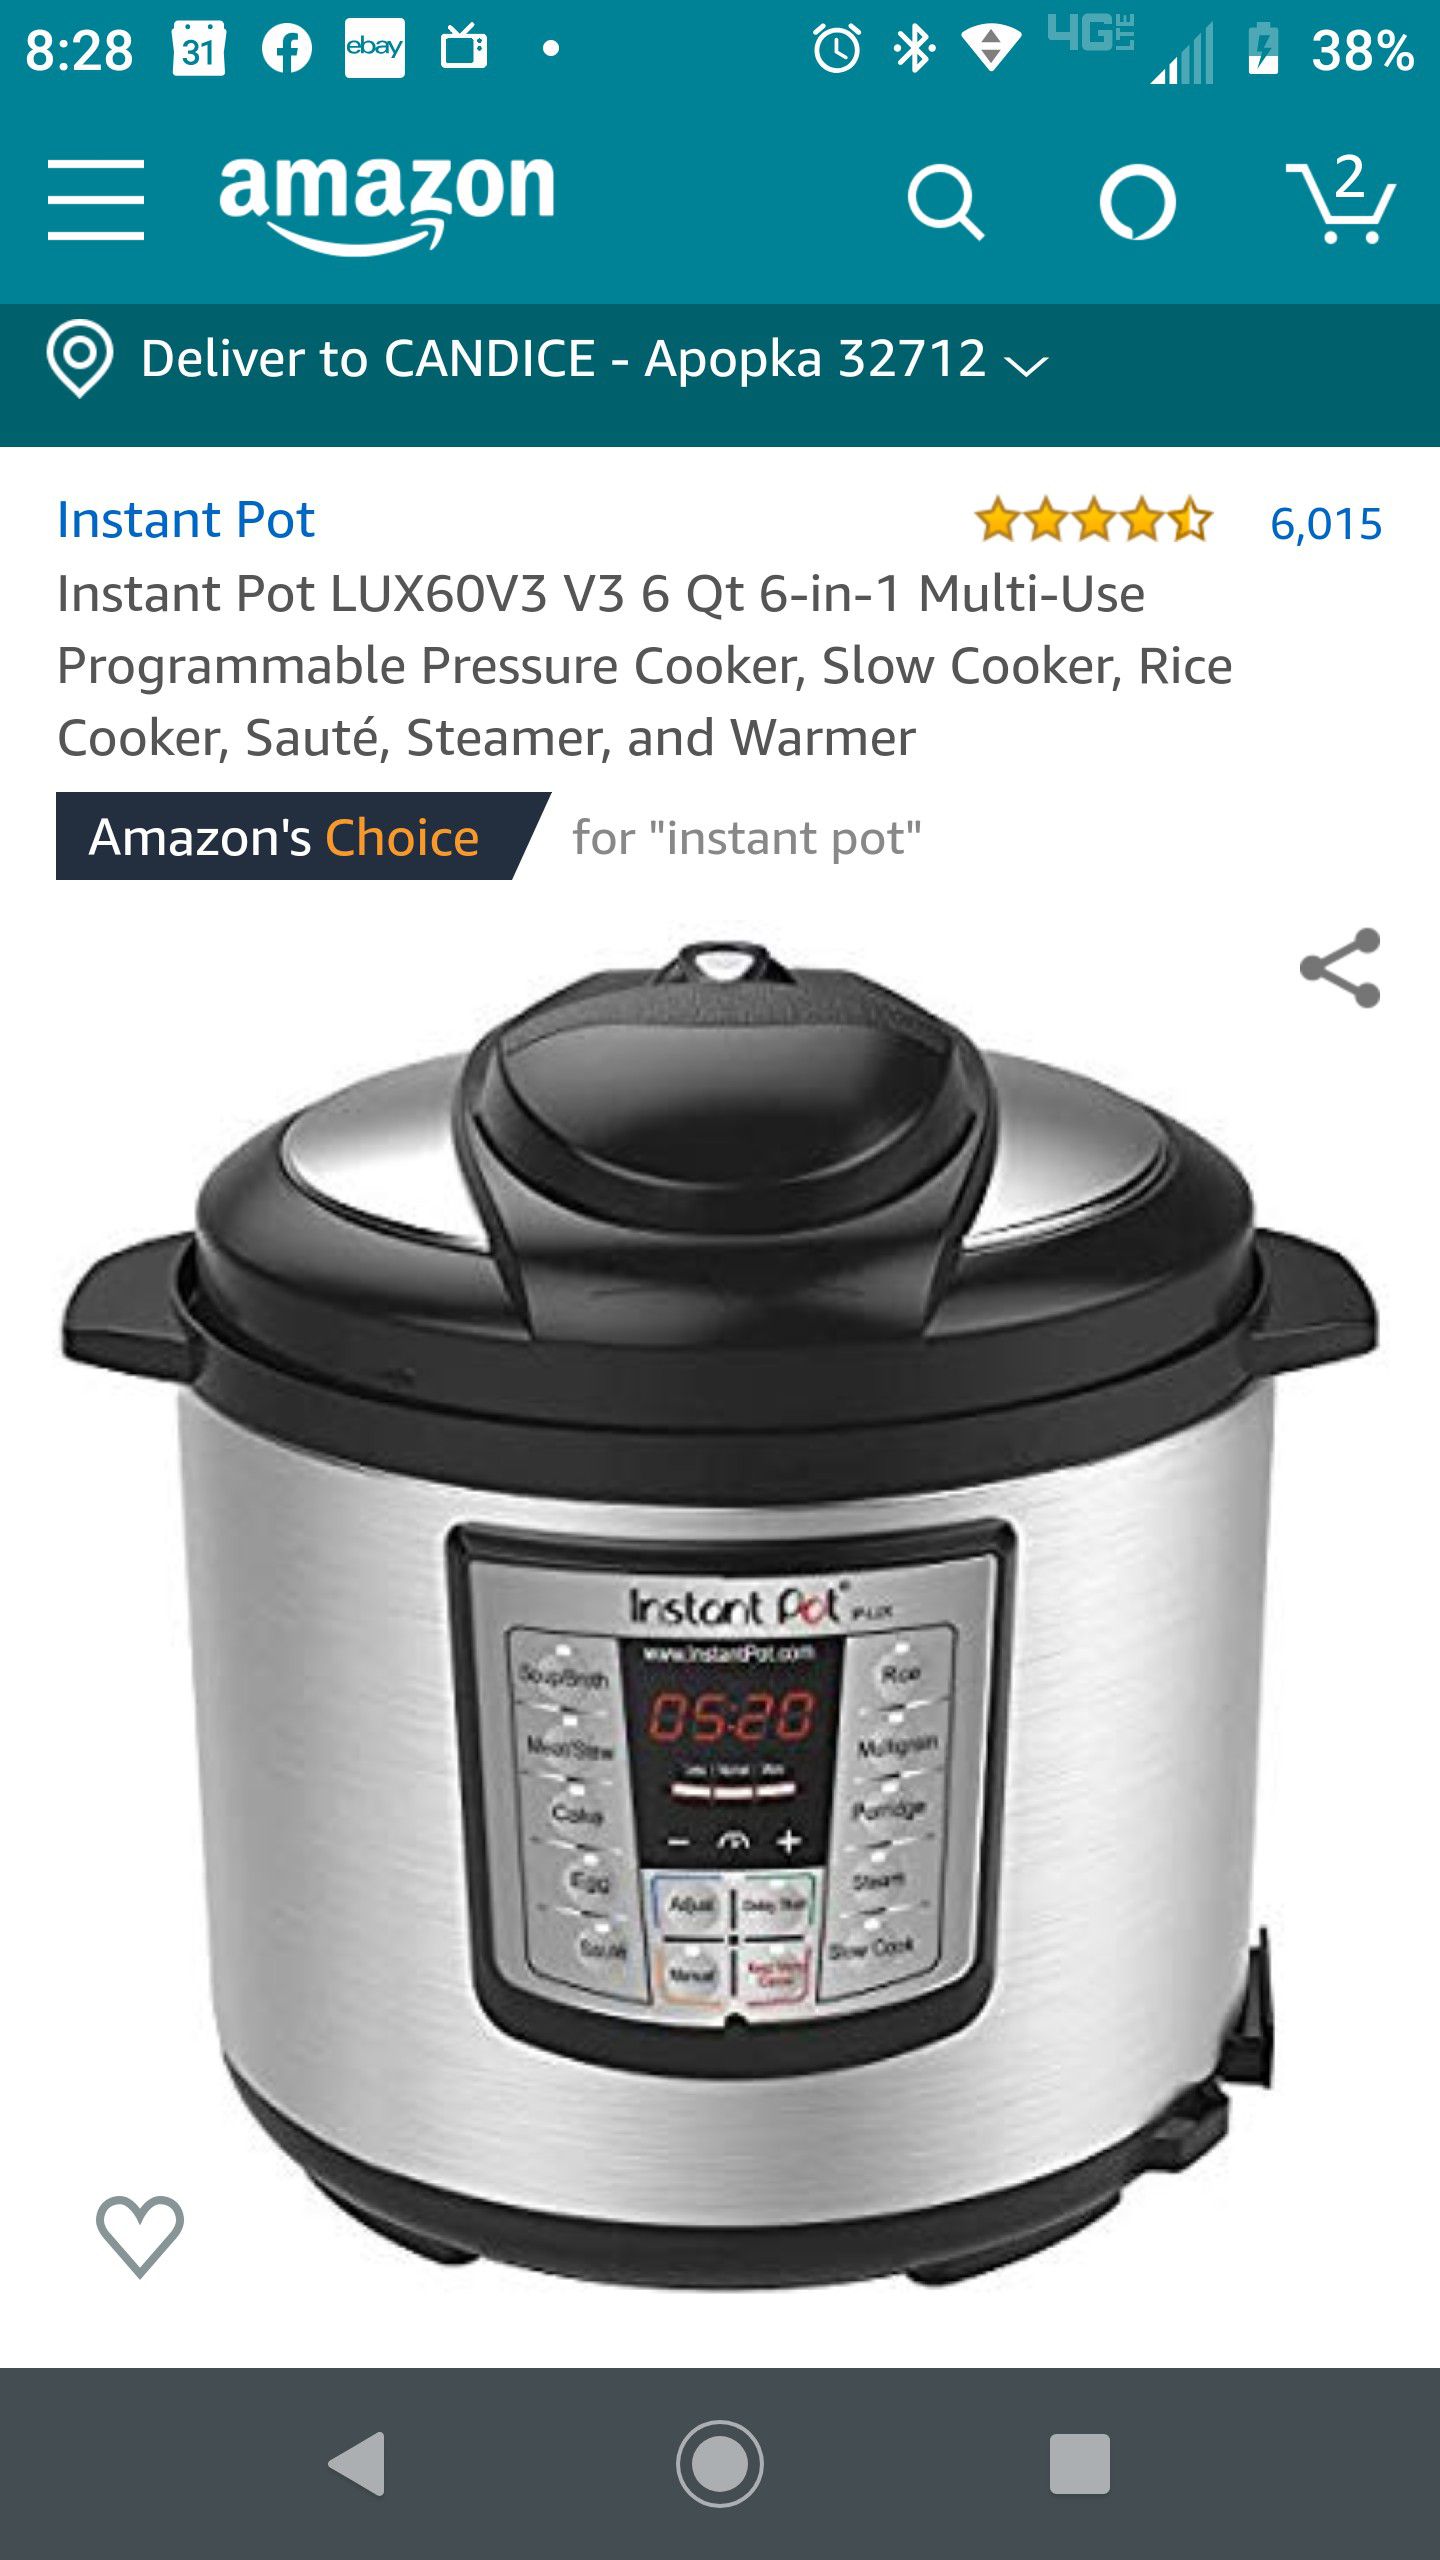 Instant Pot LUX60V3 V3 6 Qt 6-in-1 Multi-Use Programmable Pressure Cooker, Slow Cooker, Rice Cooker, Sauté, Steamer, and Warmer